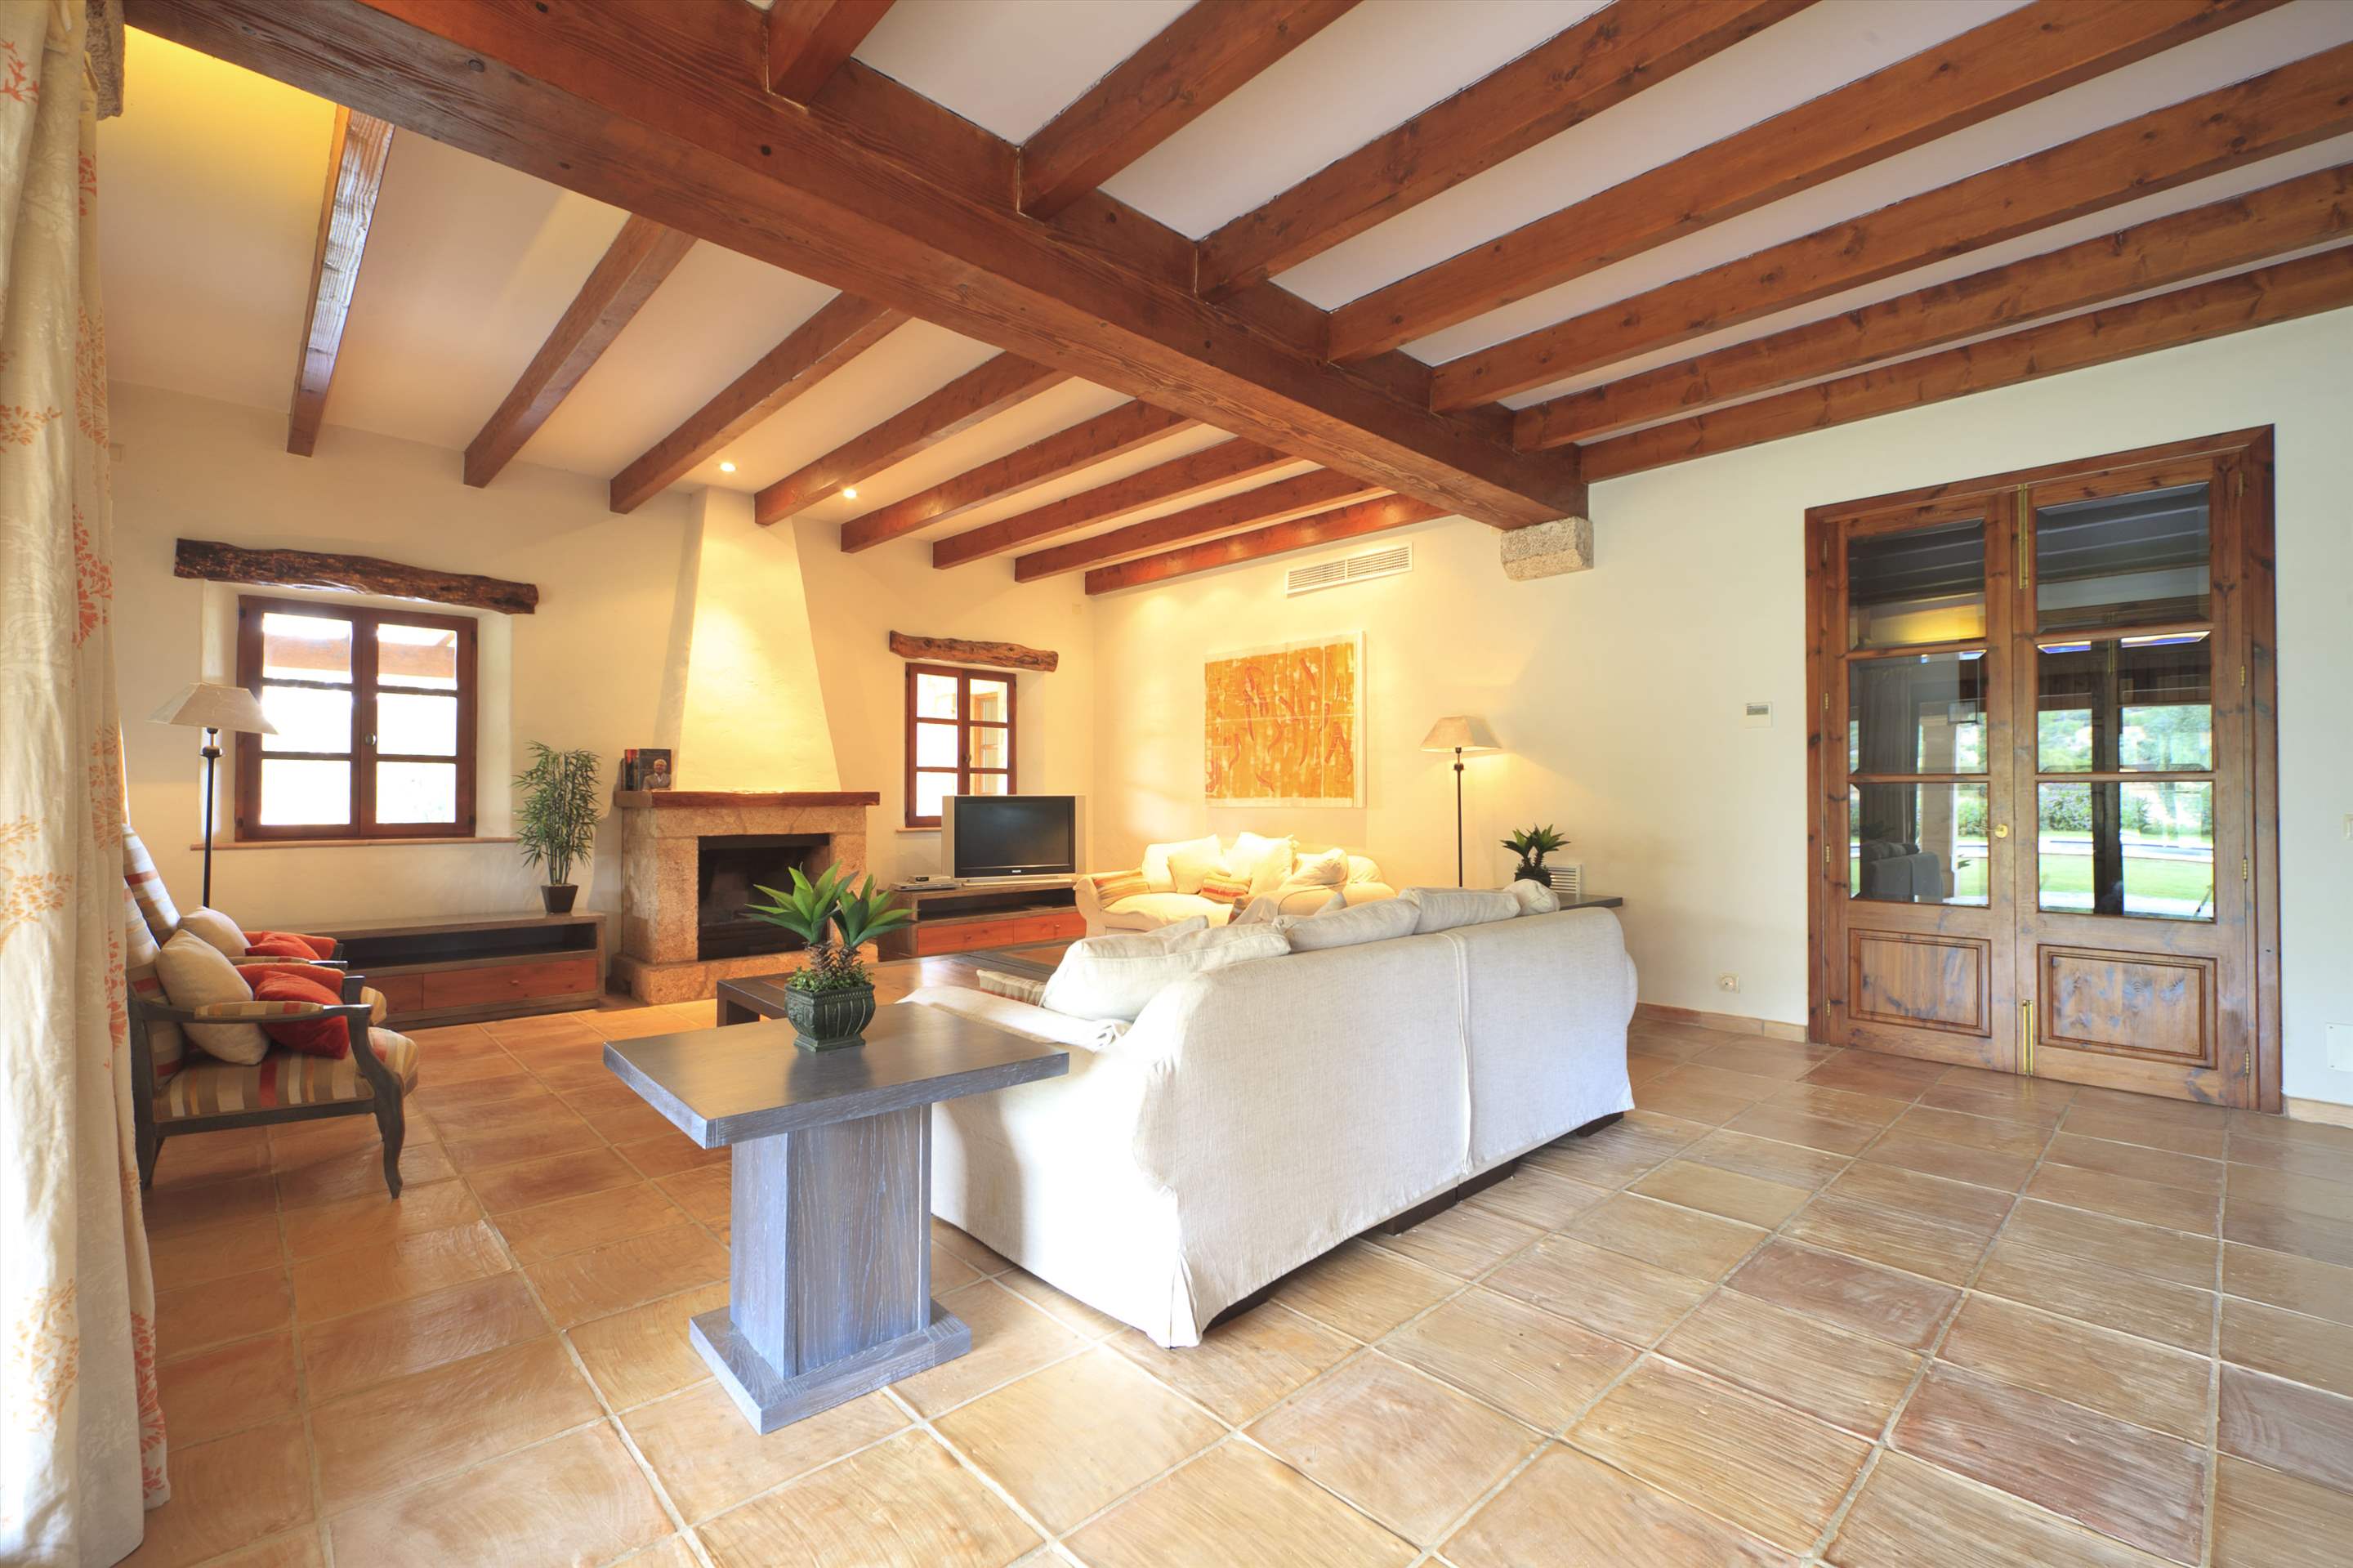 Son Ferragut de Baix , 4 bedroom villa in Sa Pobla, Buger, Inca , Majorca Photo #4